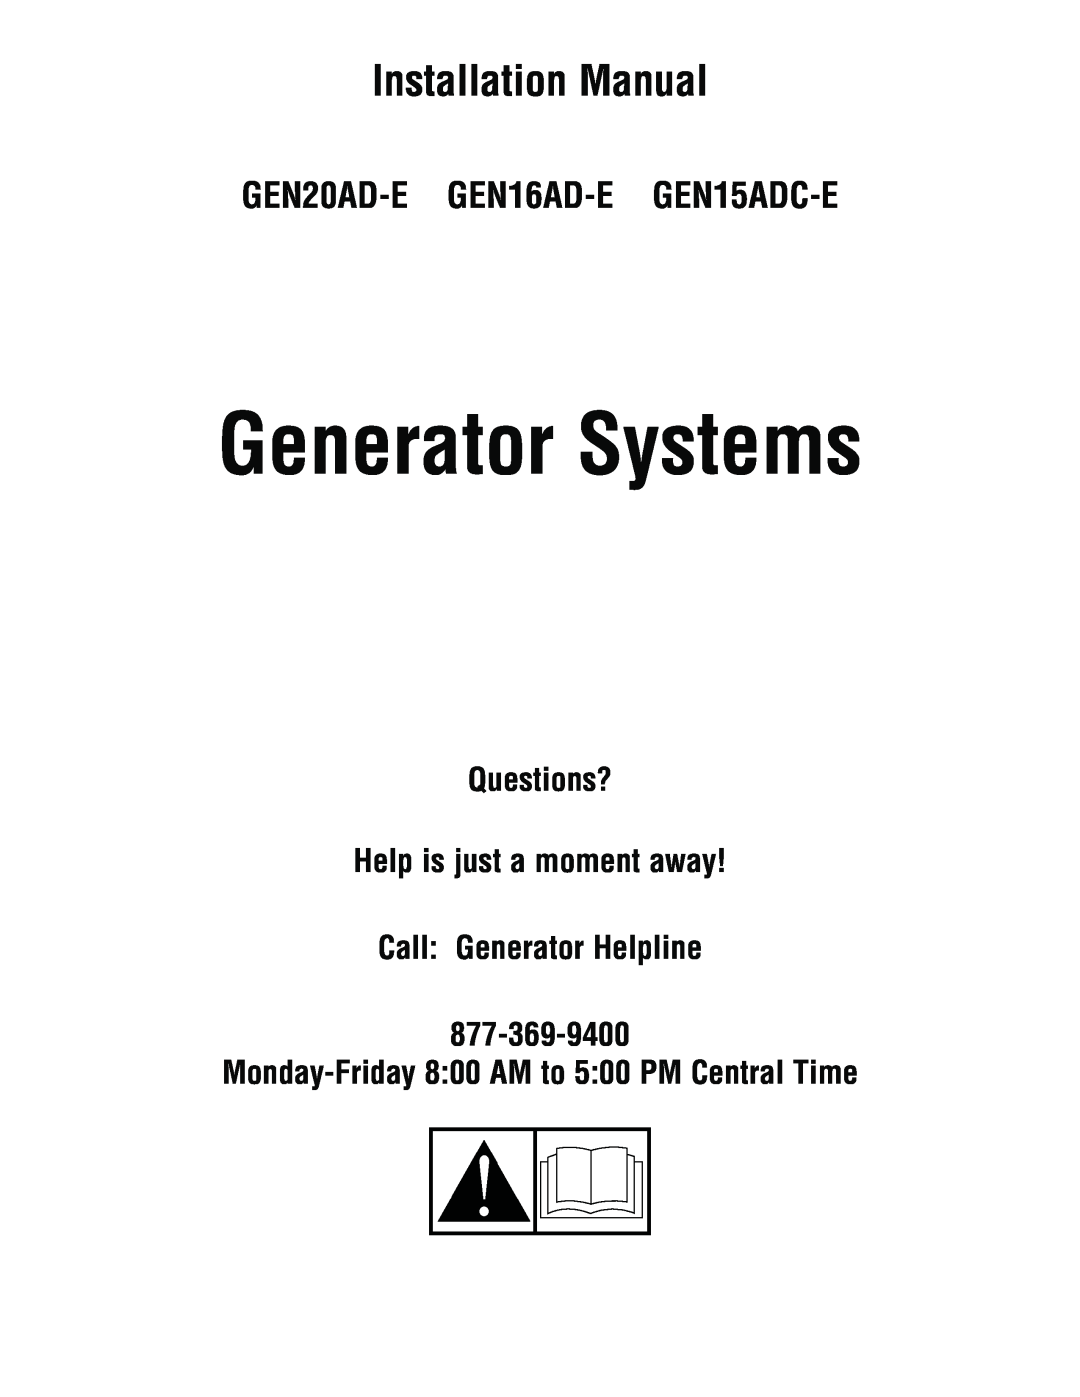 Rheem GEN16AD-E installation manual Installation Manual, Questions? Help is just a moment away Call Generator Helpline 